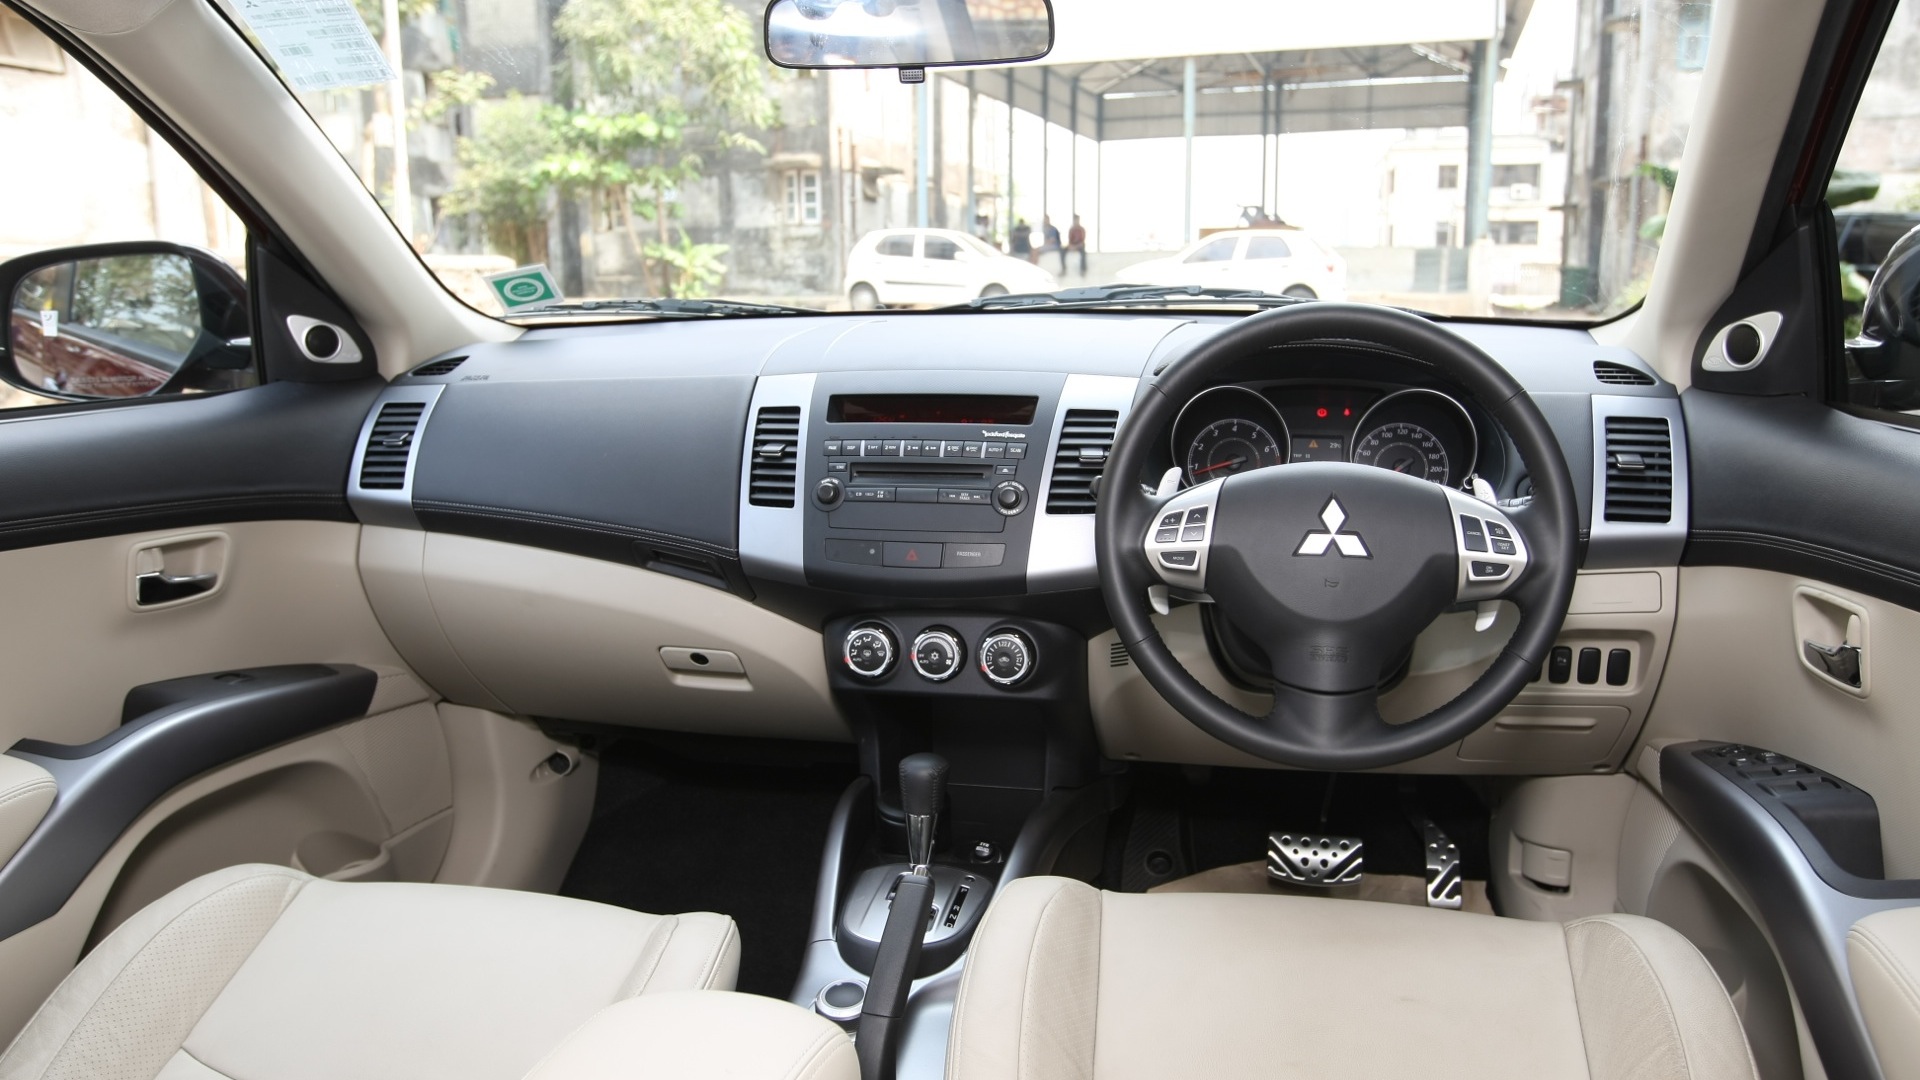 Mitsubishi-Outlander-2013-STD-Interior